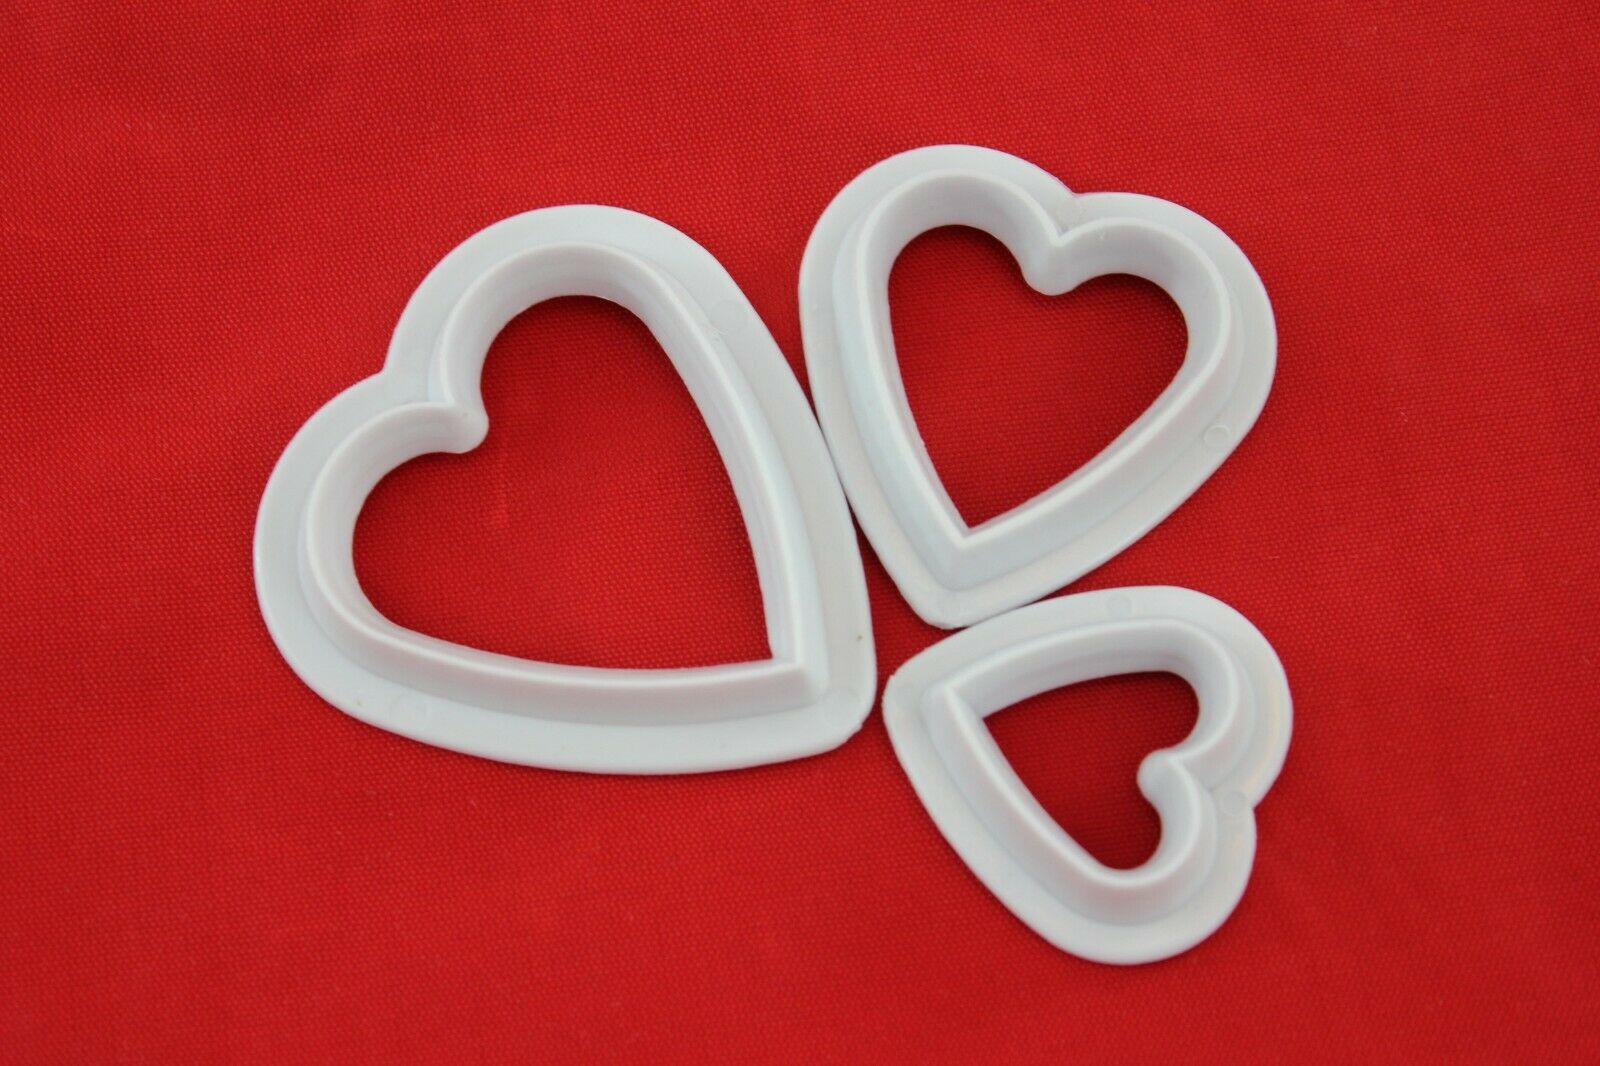 3pc Heart shape plunger cutter set Sugarcraft Mould cake decorating fondant